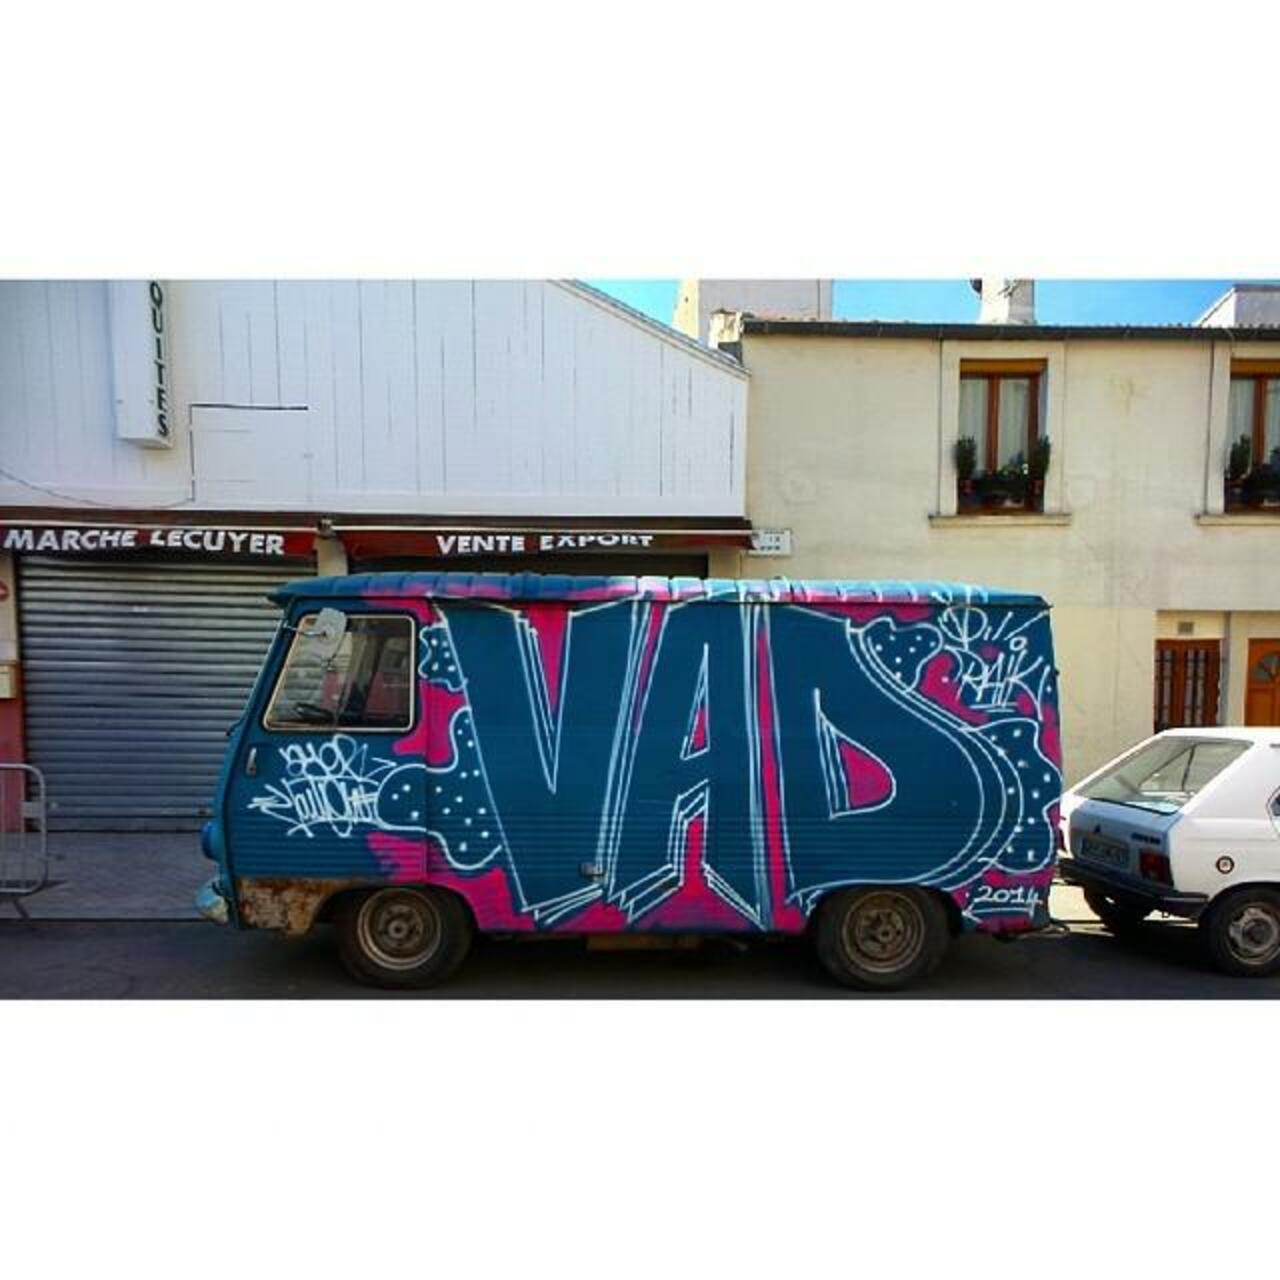 #HastaLaVista #Street #Art #StreetArt #Graffiti #Graff #Graph #GraffitiLover #InstaGraffit… http://ift.tt/1cGBRsS http://t.co/XRgGdW6jvj